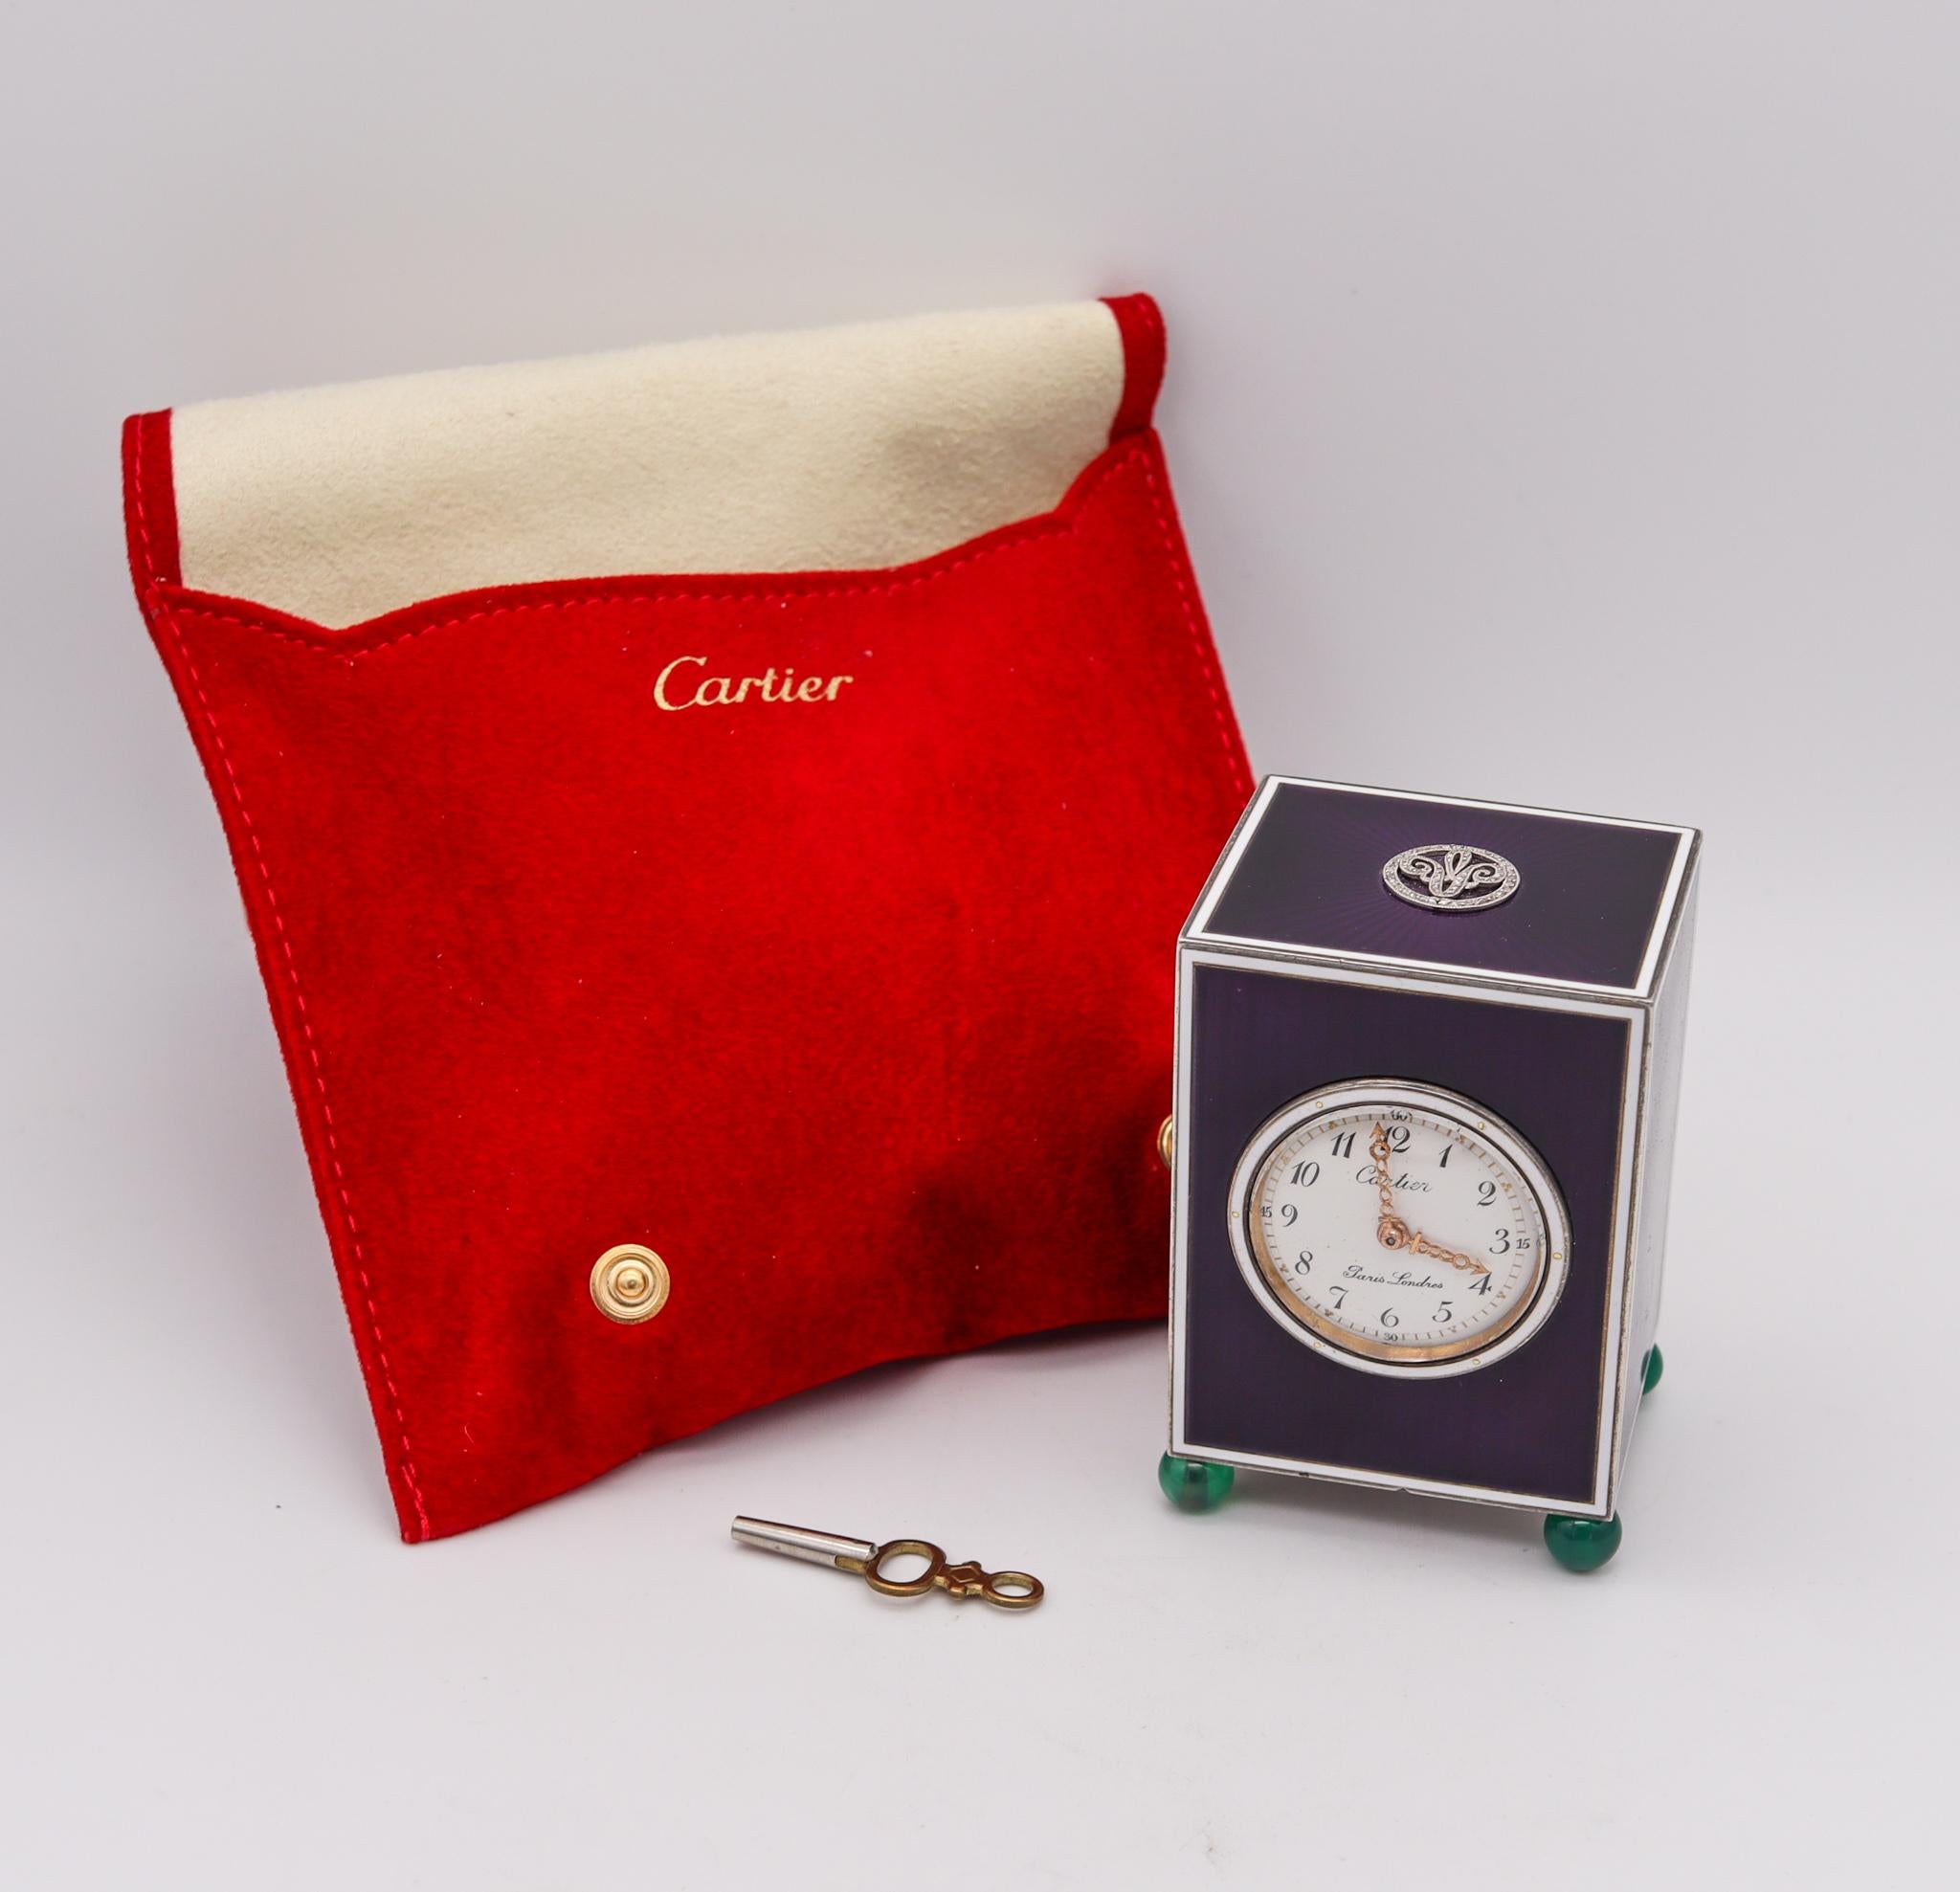 Belle epoque desk clock designed by Cartier.

An impressive and magnificent 